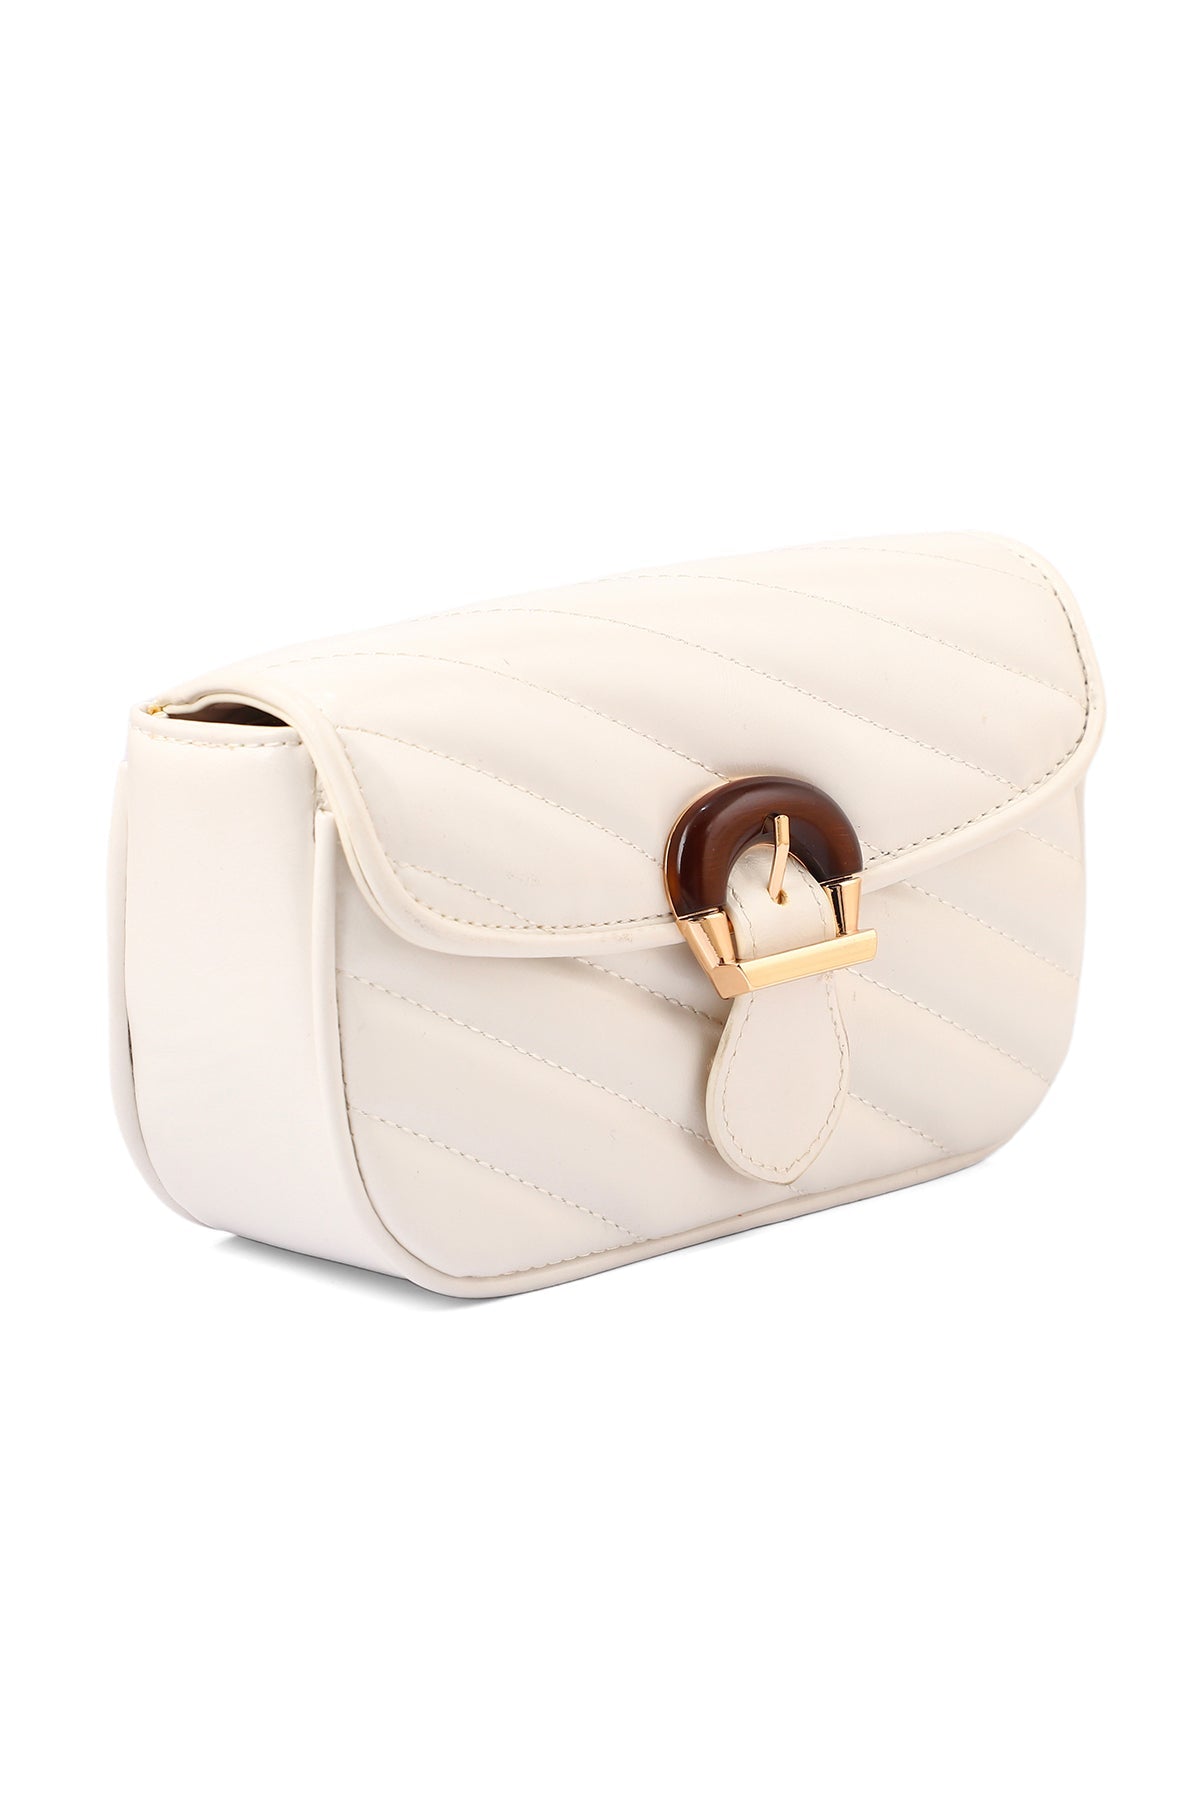 Baguette Shoulder Bags B15085-White